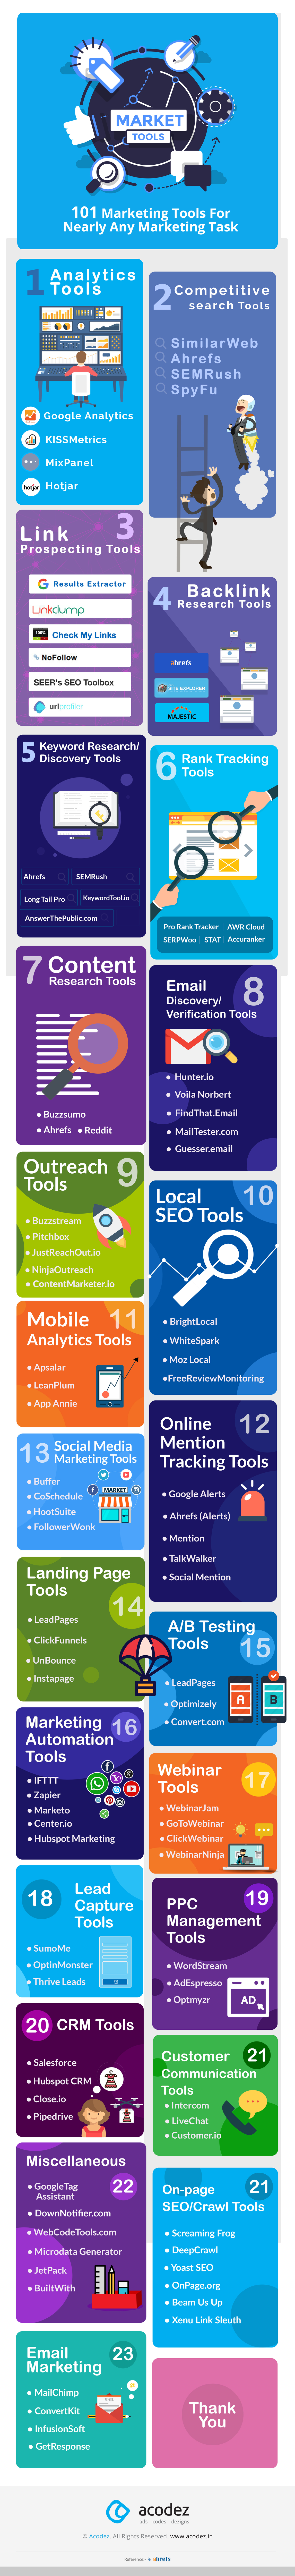 Infographic - 101 Marketing tools